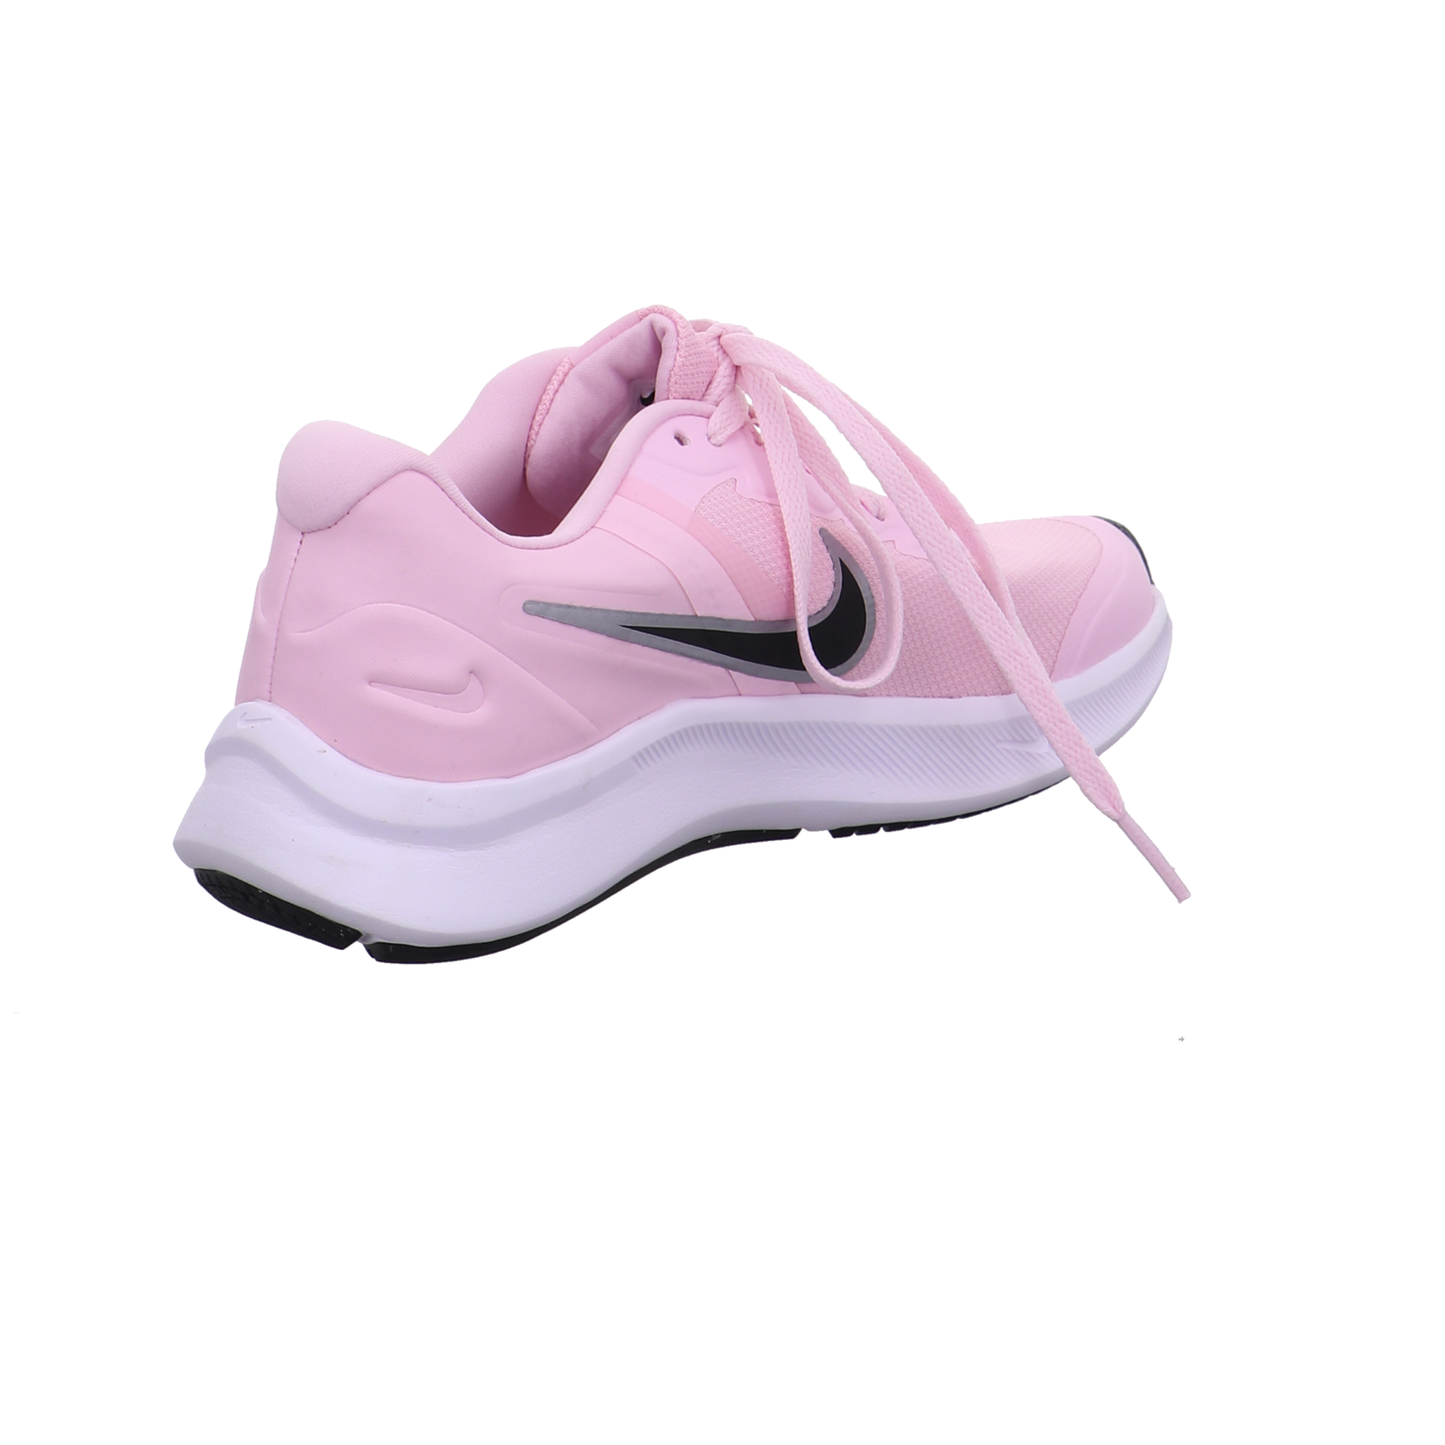 Nike Sneaker pink Bild5